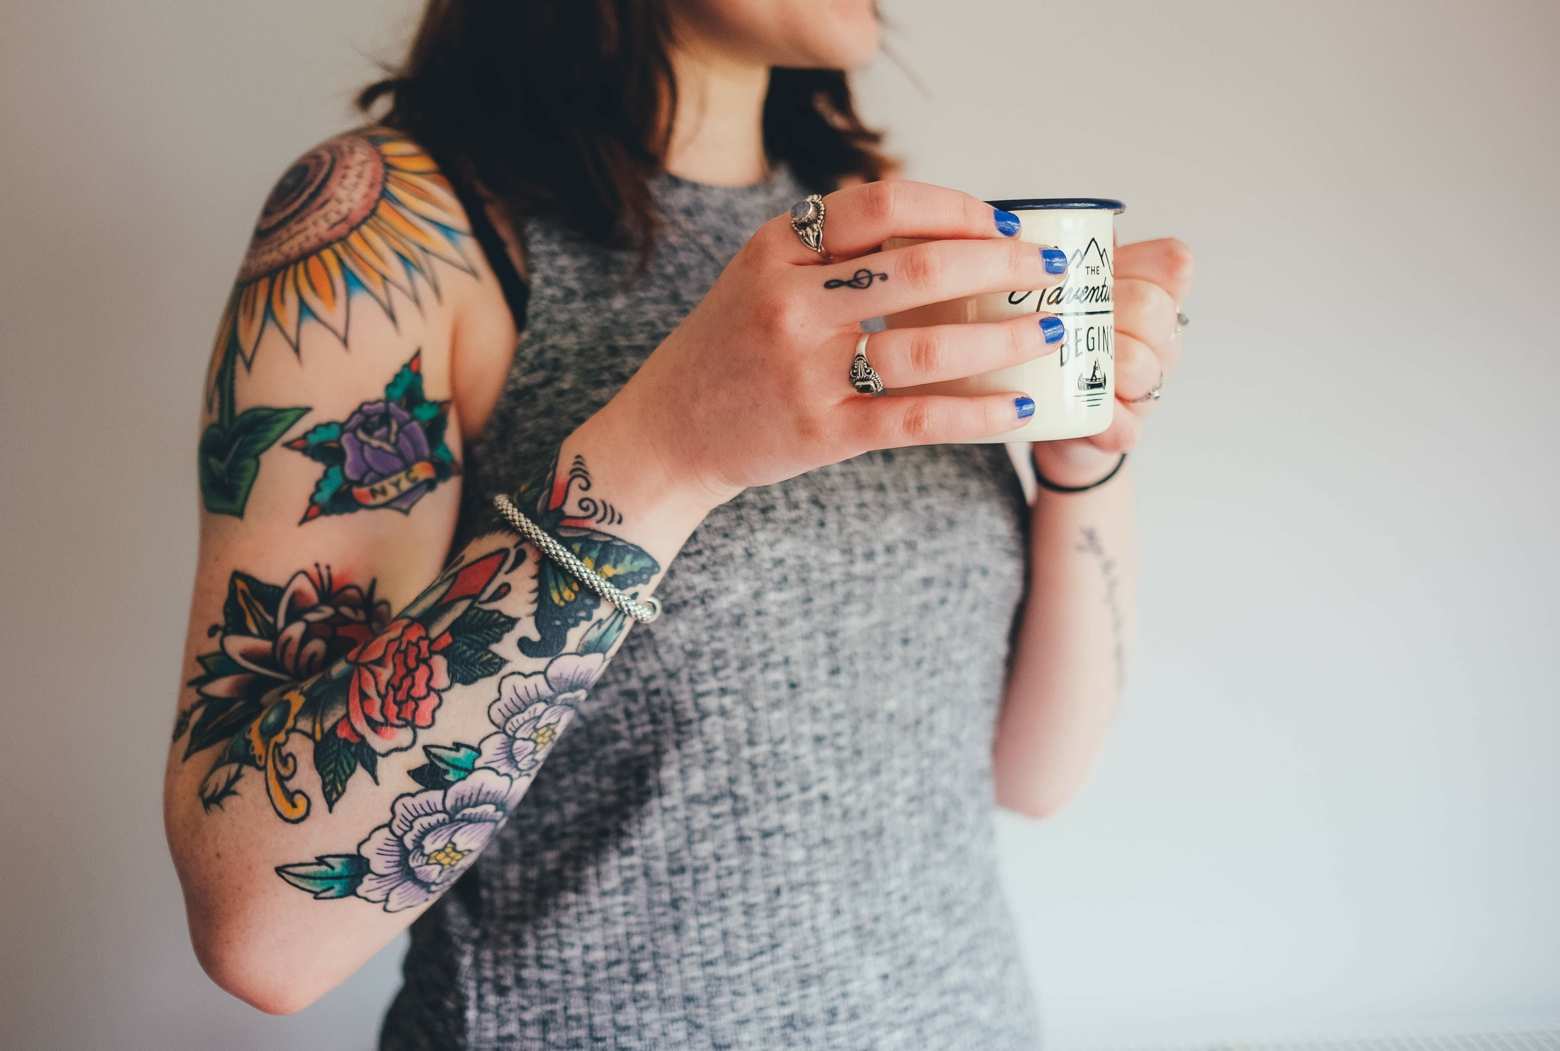 Frauen arm blumen tattoos 250+ Tattoos